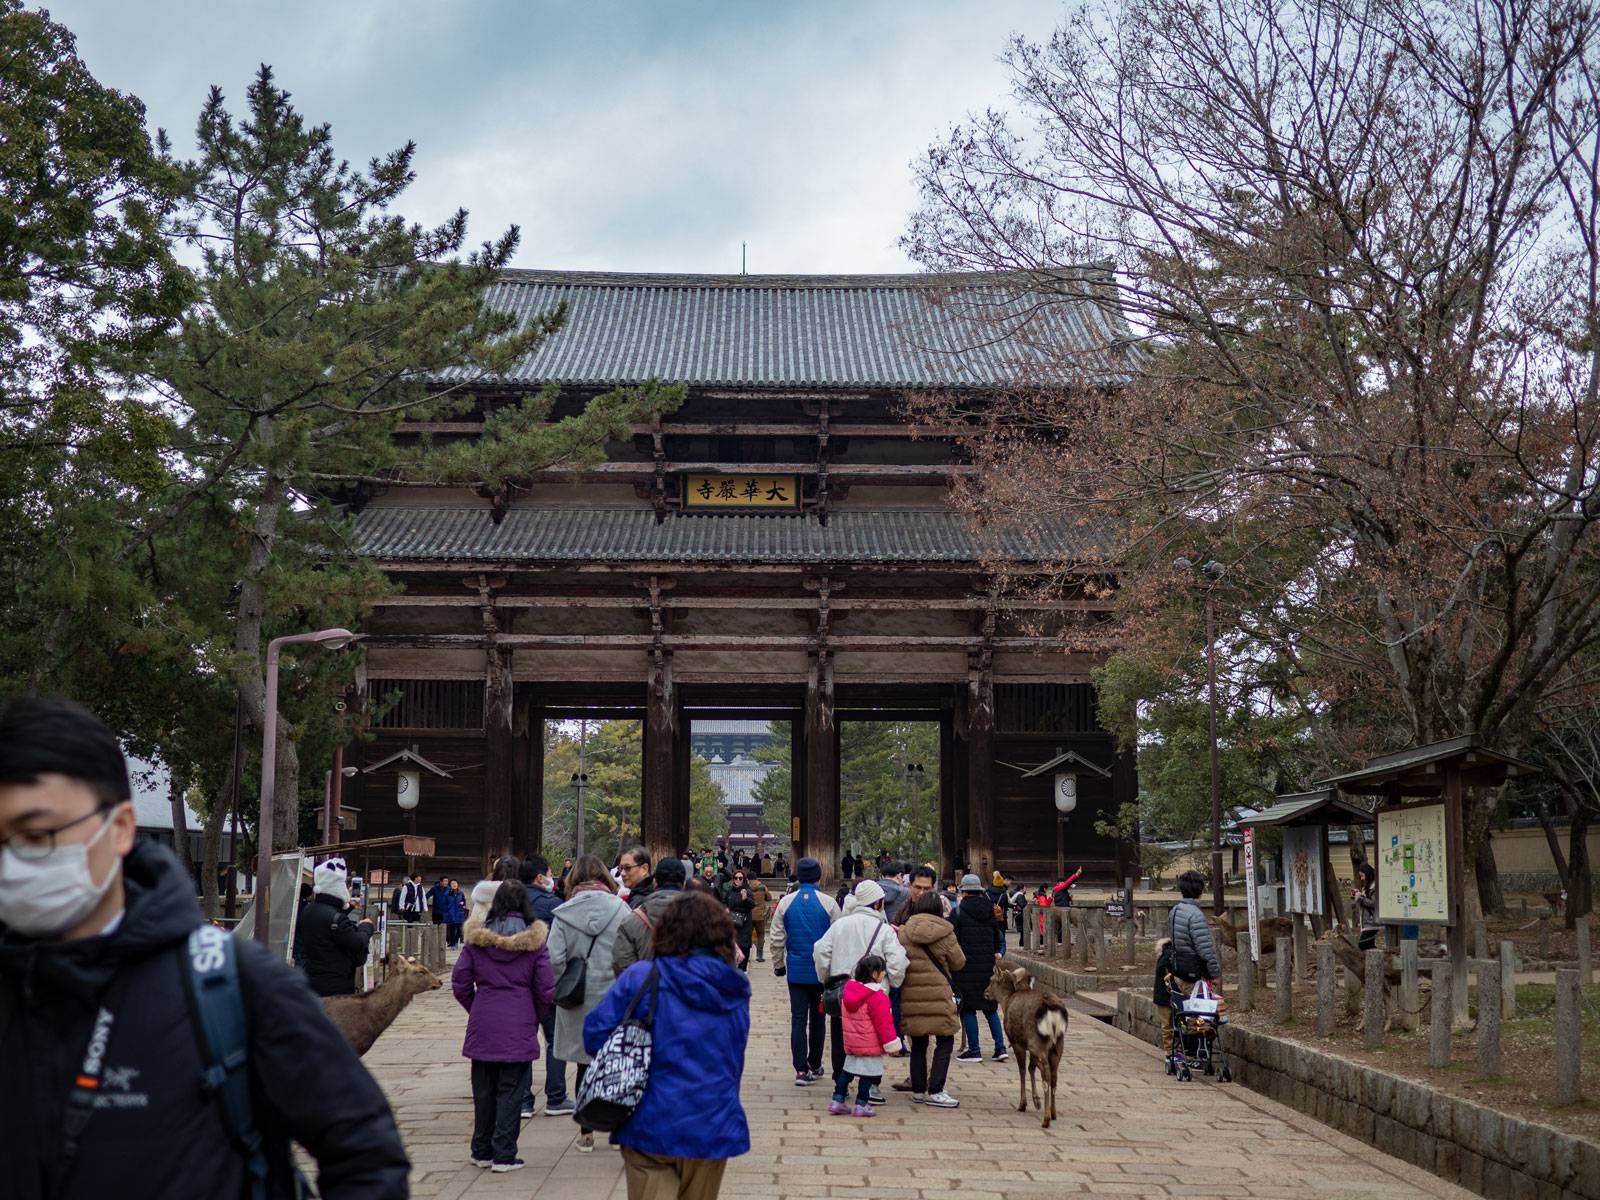 Entrance to Tōdai-ji temple